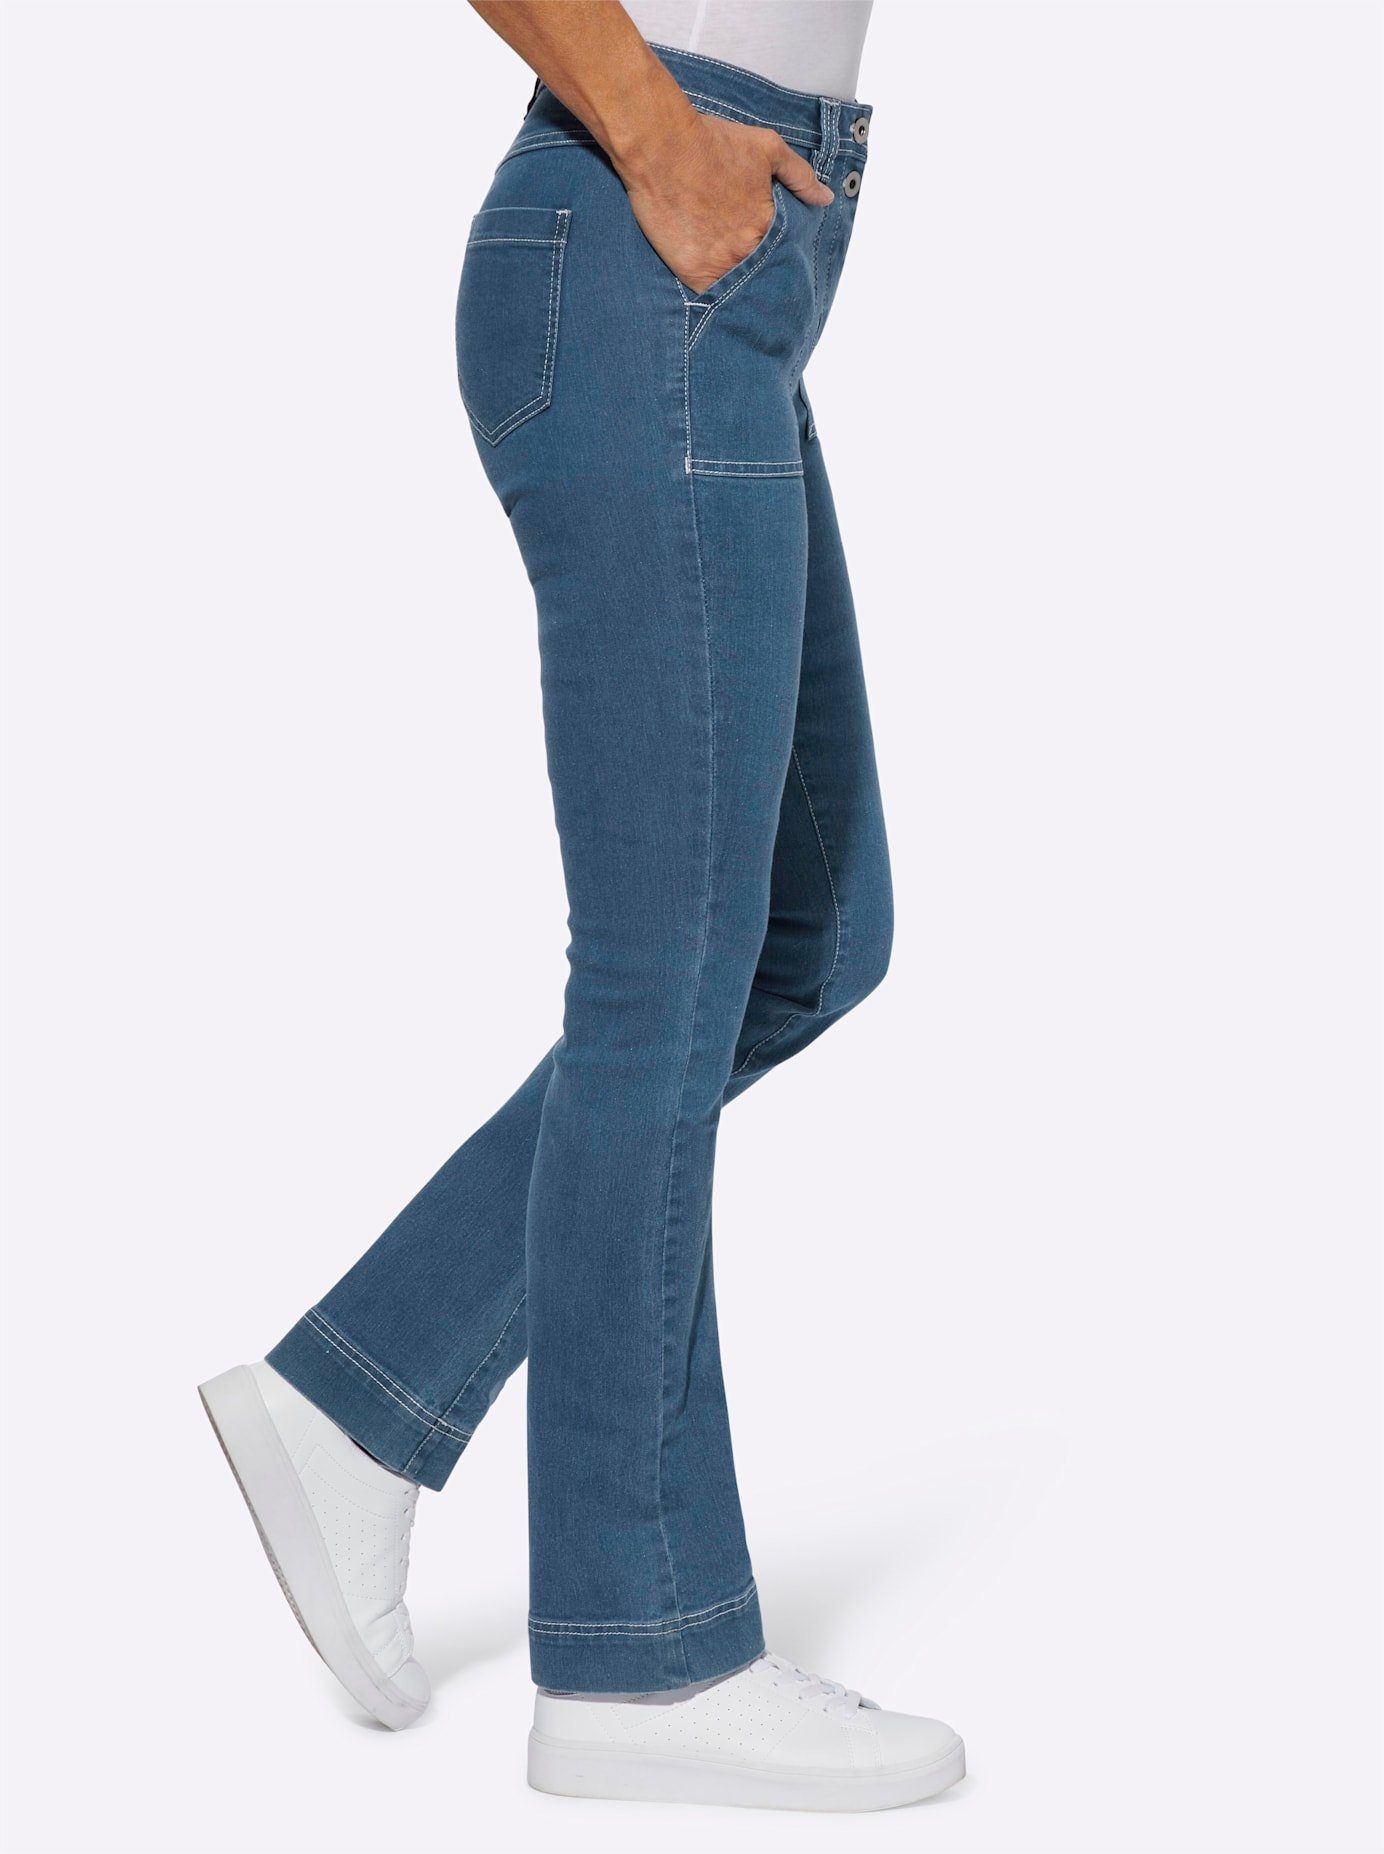 Classic Basics Prettige jeans